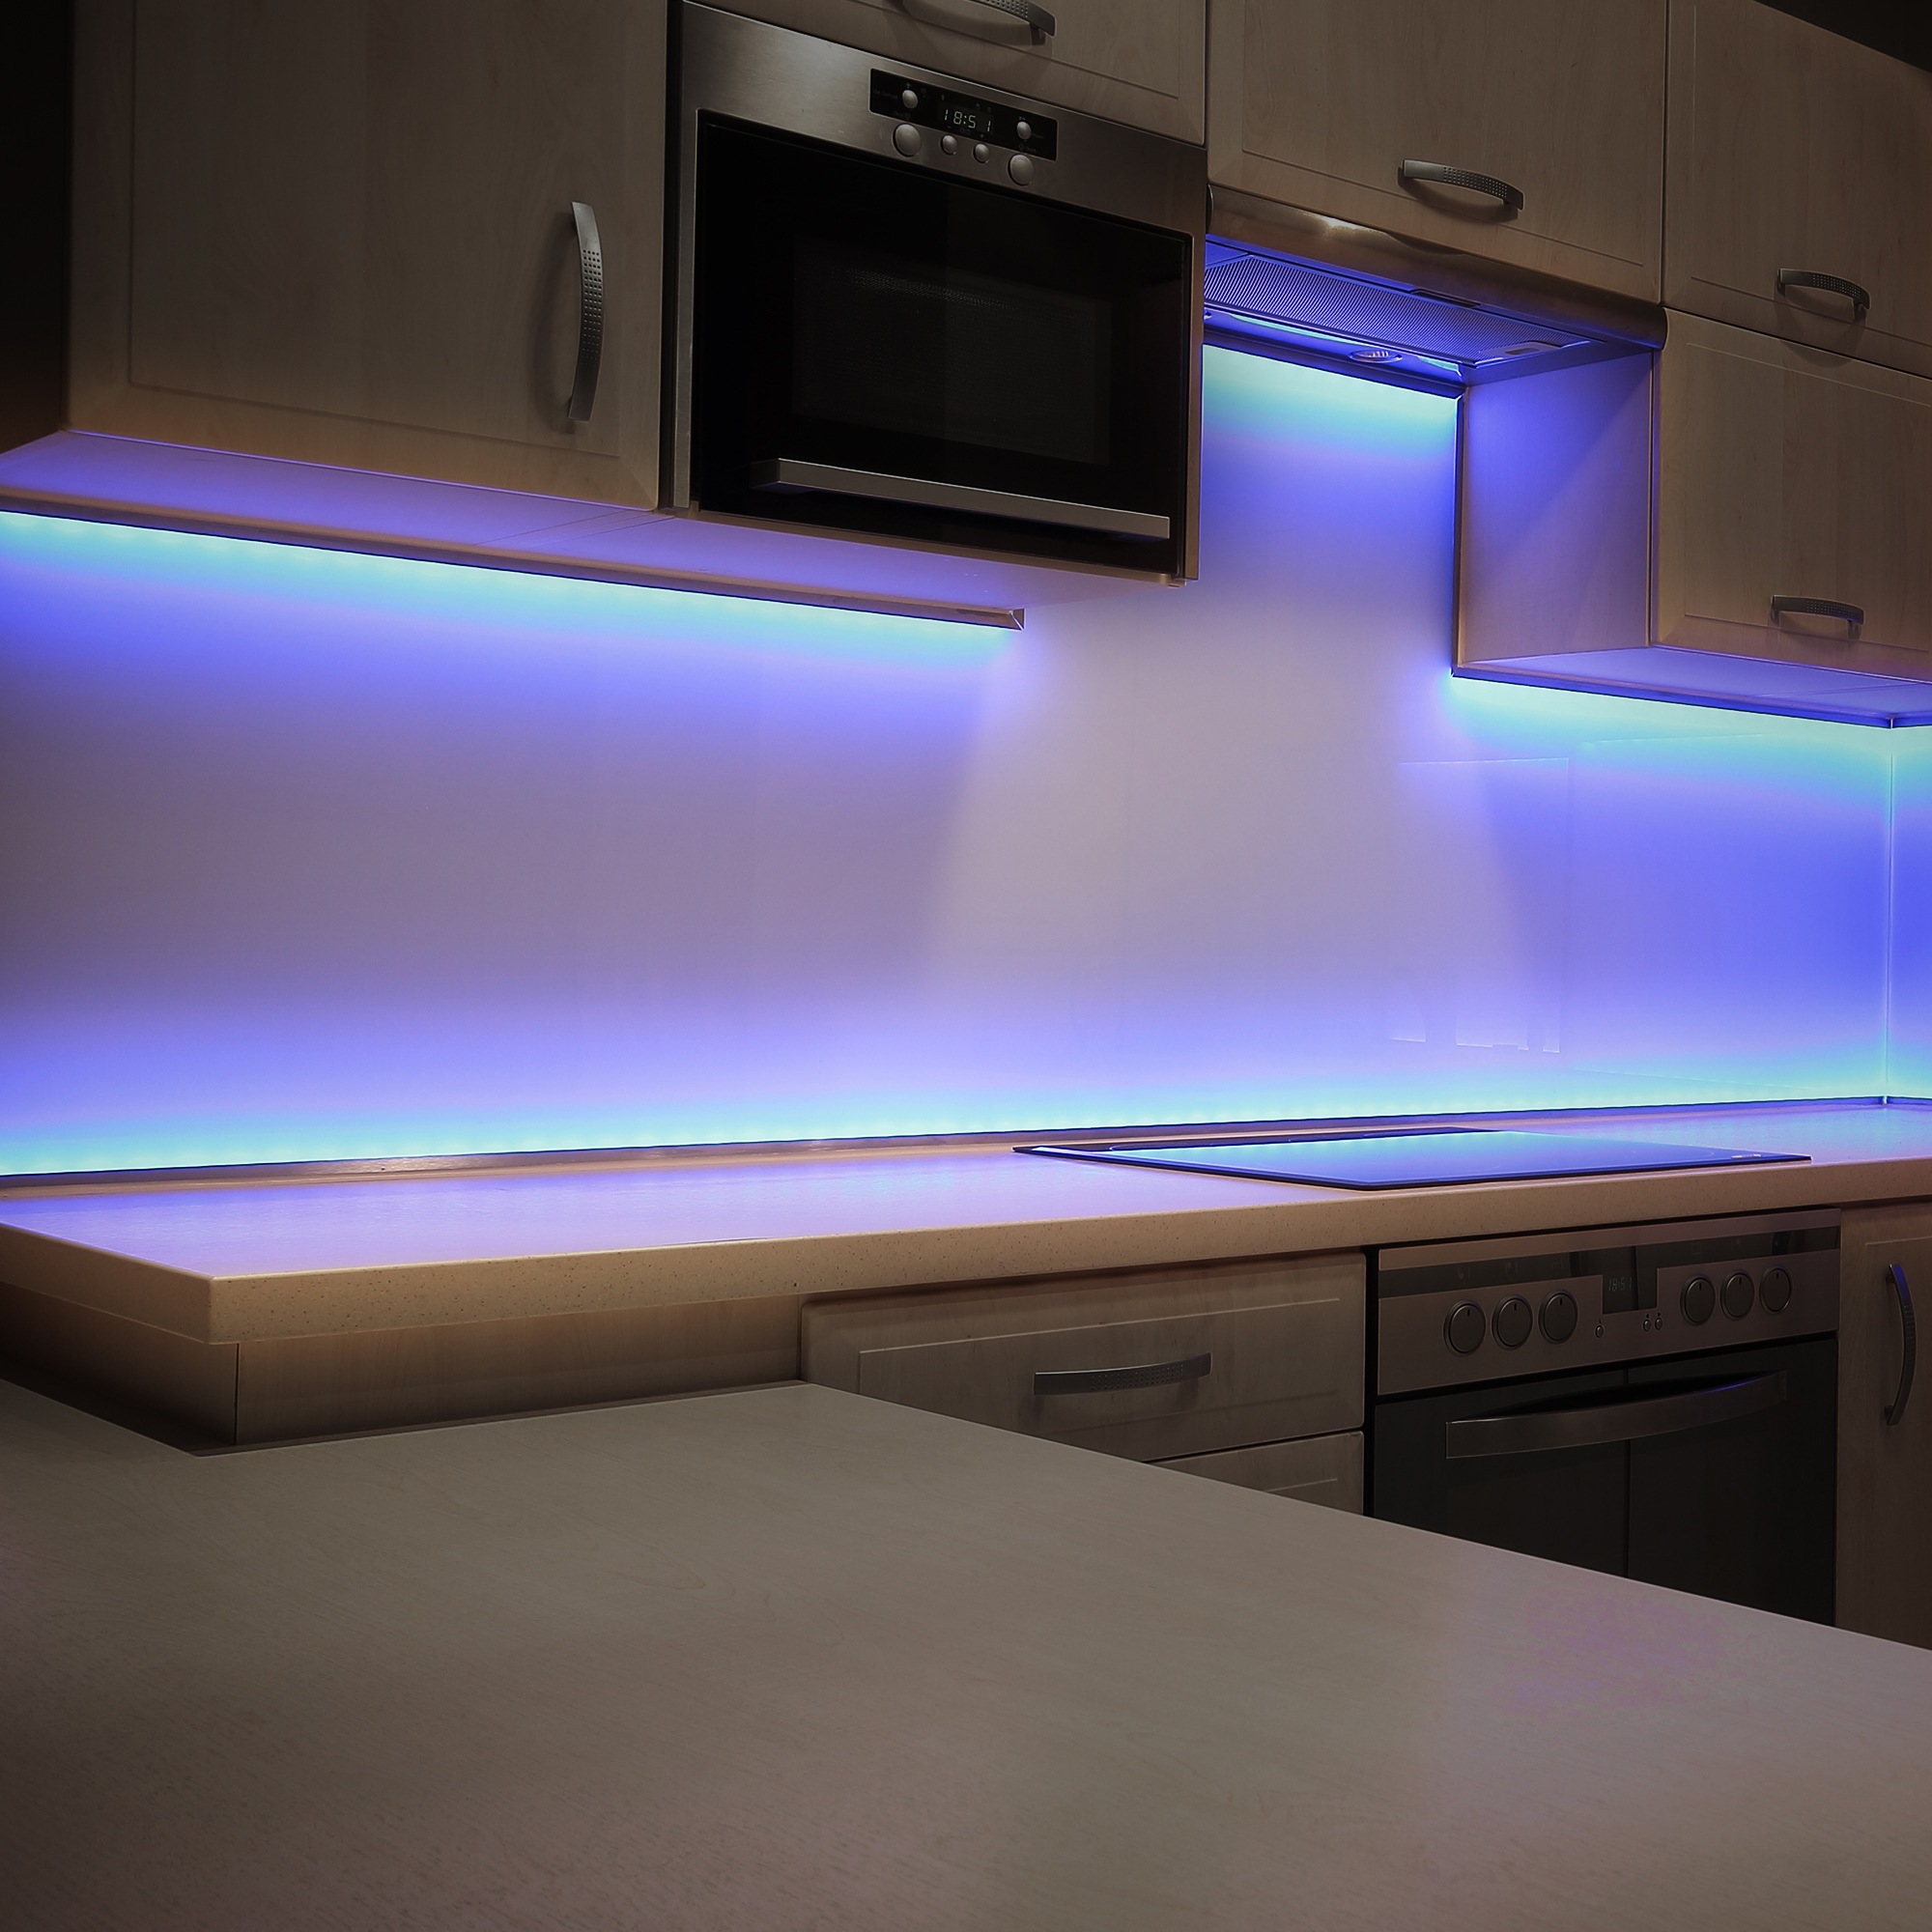 B.K.Licht LED-Streifen, 5m Smart Home LED Band dimmbar mit WiFi  App-Steuerung online bei